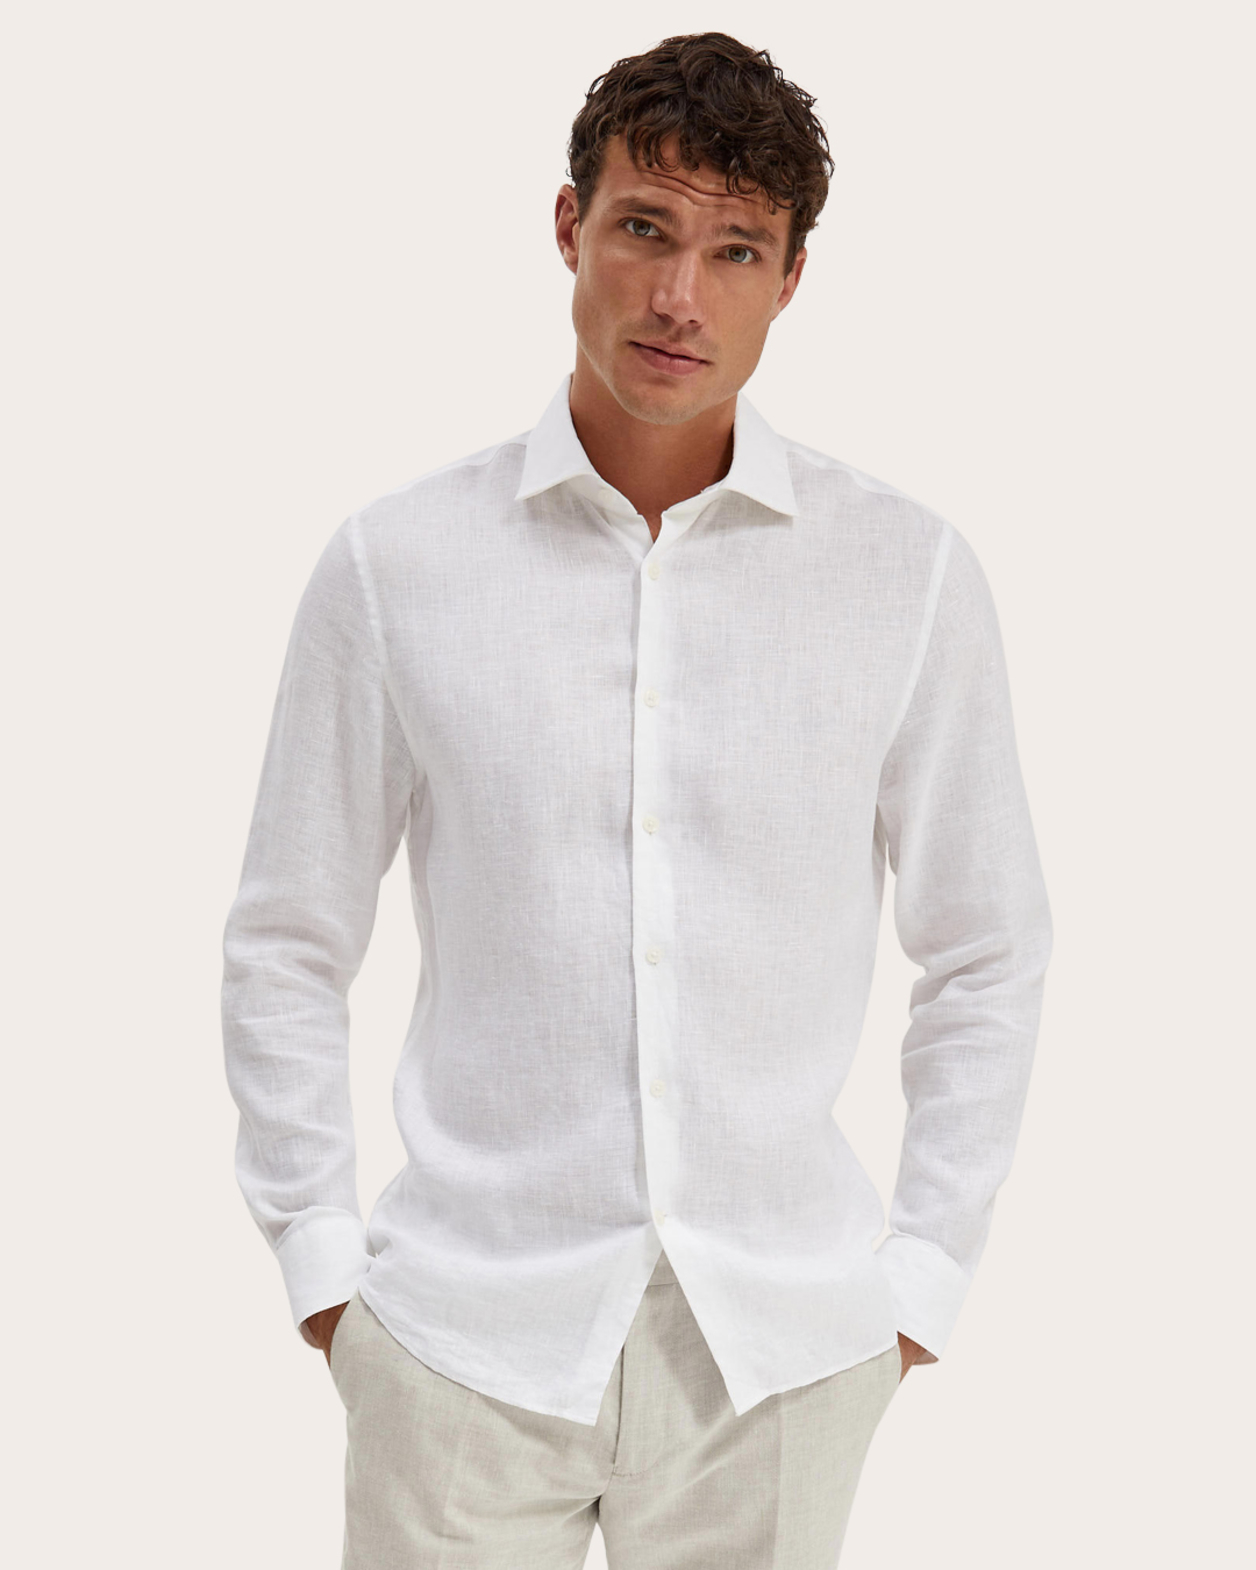 Julian Long Sleeve Slim Linen Shirt in ARCTIC WHITE